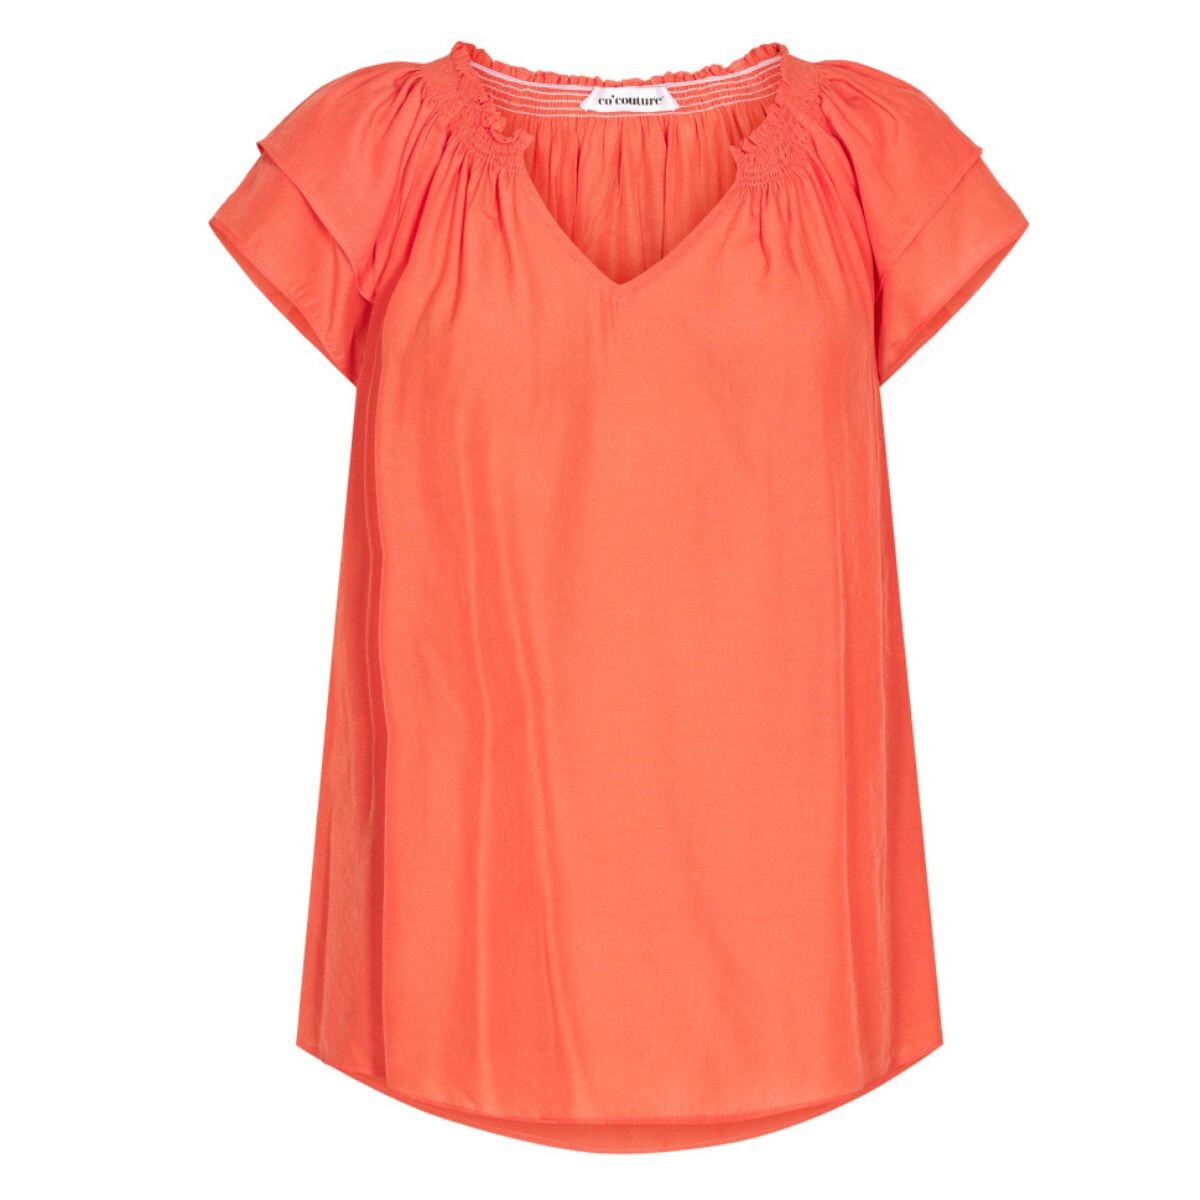 Orange Rød top - Co'couture | Rikke Solberg